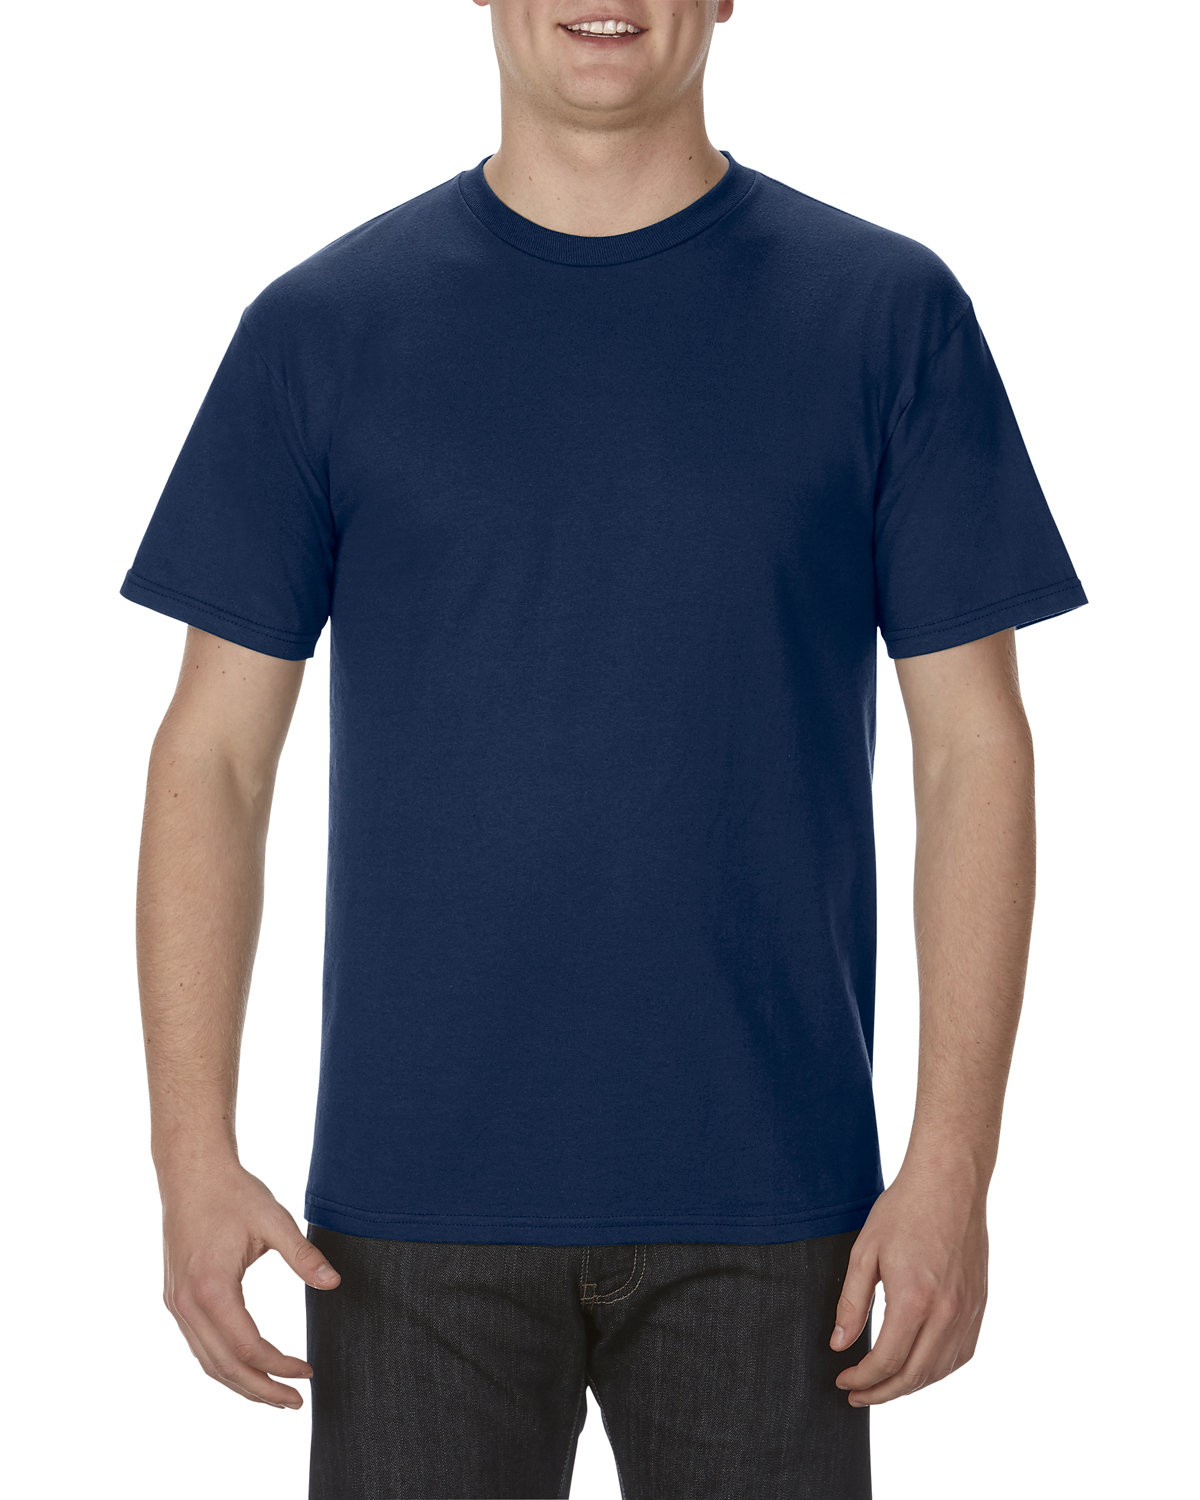 American Apparel Adult 5.5 oz., 100% Soft Spun Cotton T-Shirt TRUE NAVY 